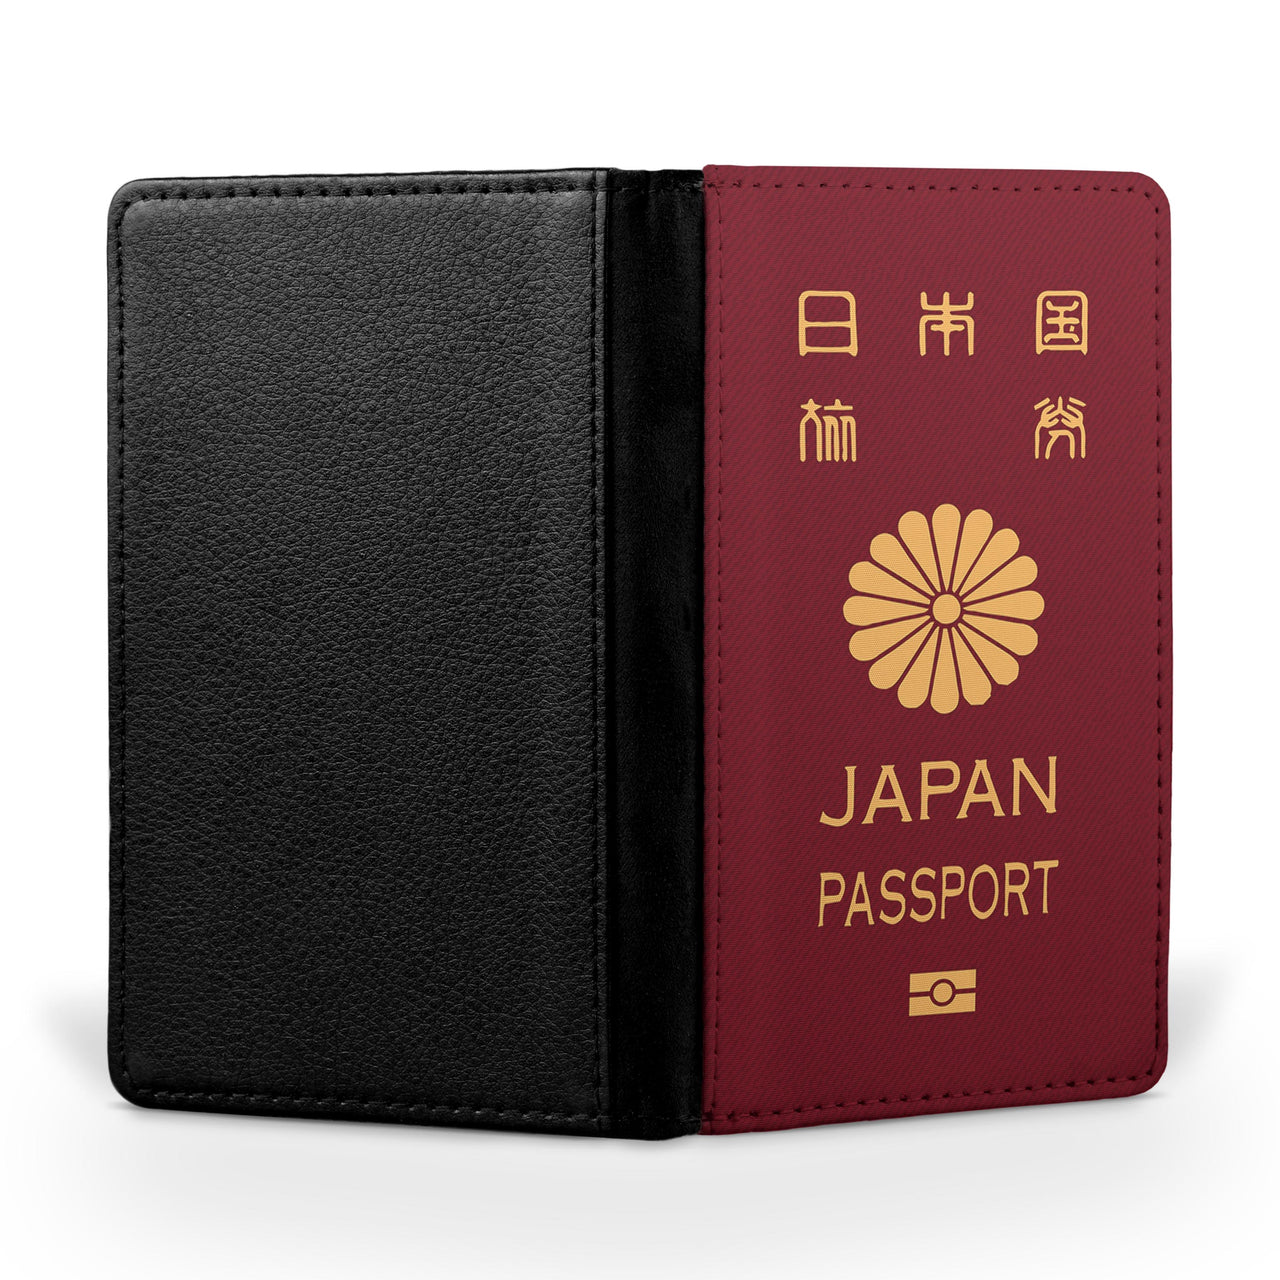 Japan Passport Designed Passport & Travel Cases